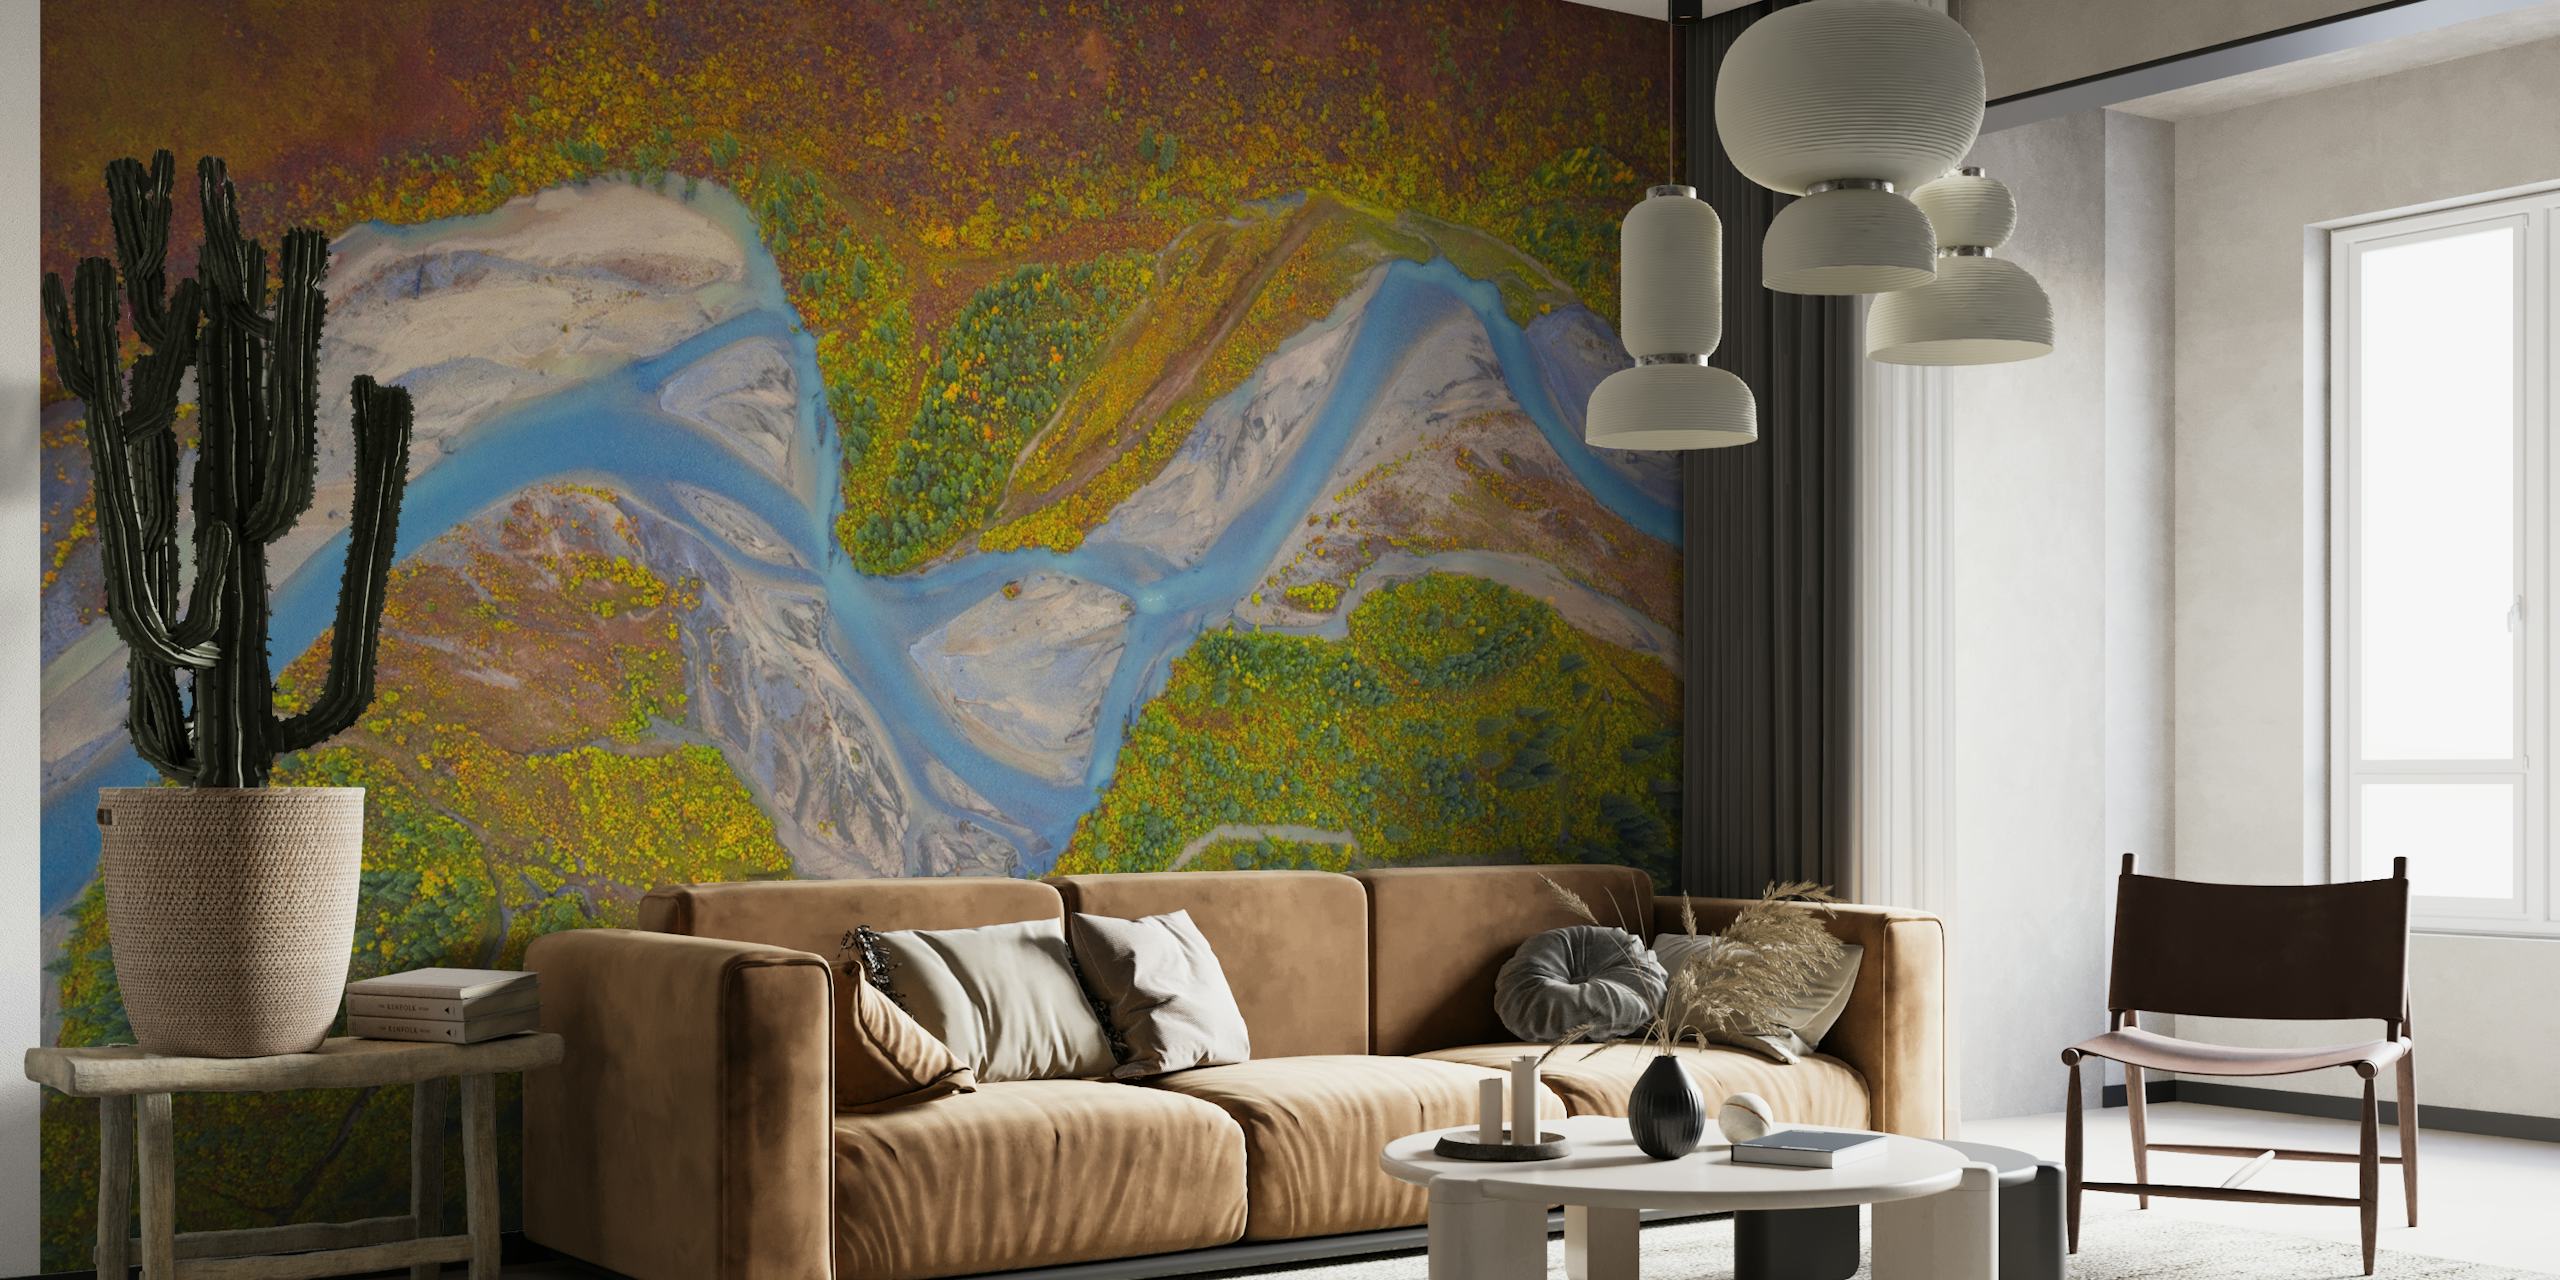 Mural de pared del río Matanuska con un pintoresco paisaje de Alaska, con un río sinuoso y prados coloridos